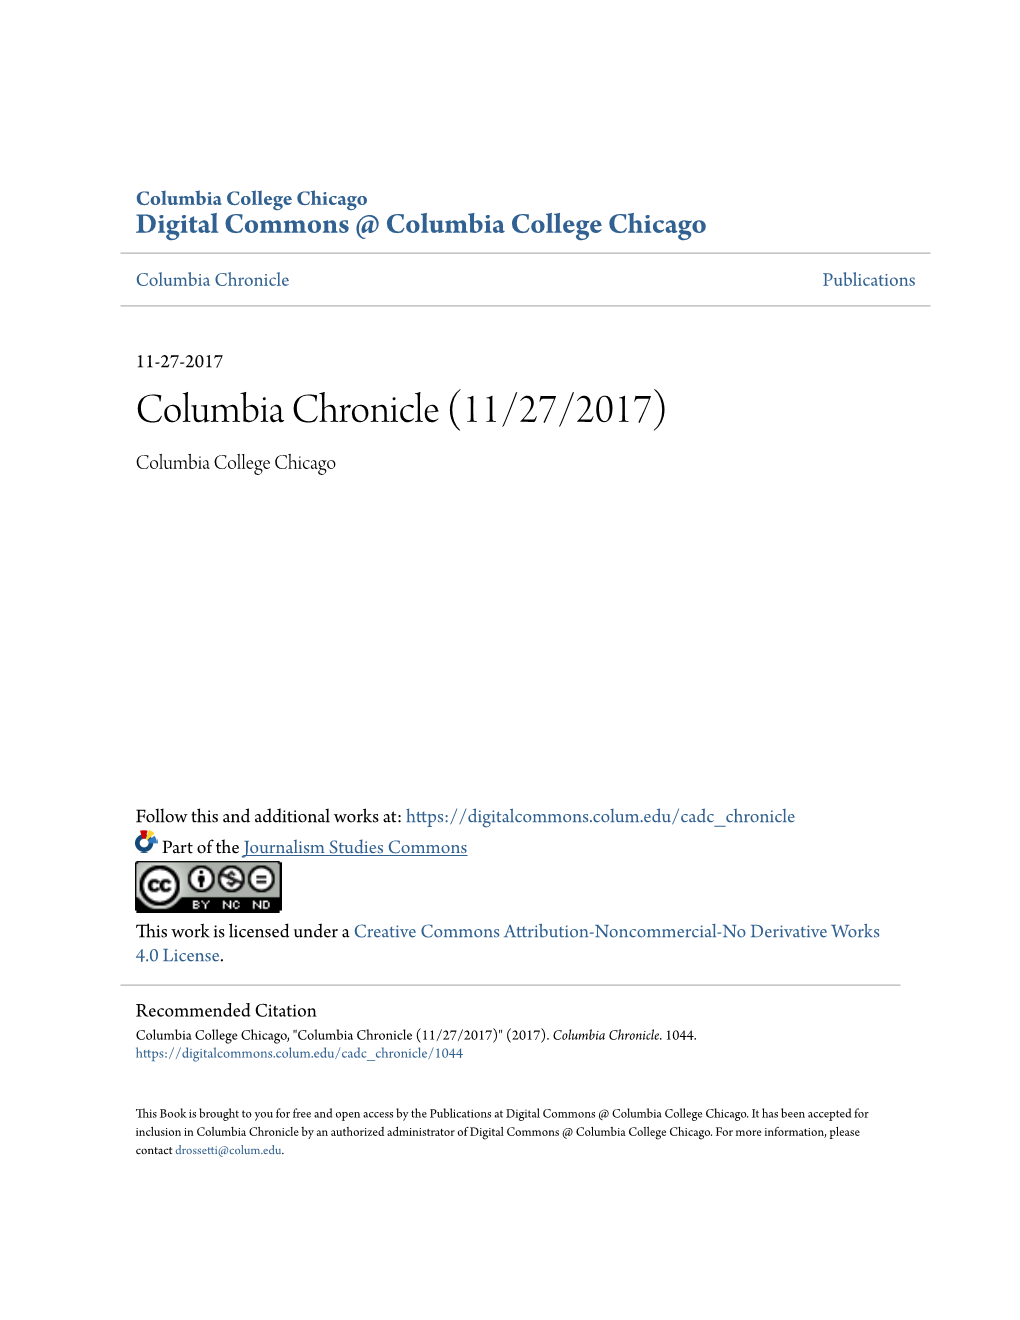 Columbia Chronicle (11/27/2017) Columbia College Chicago